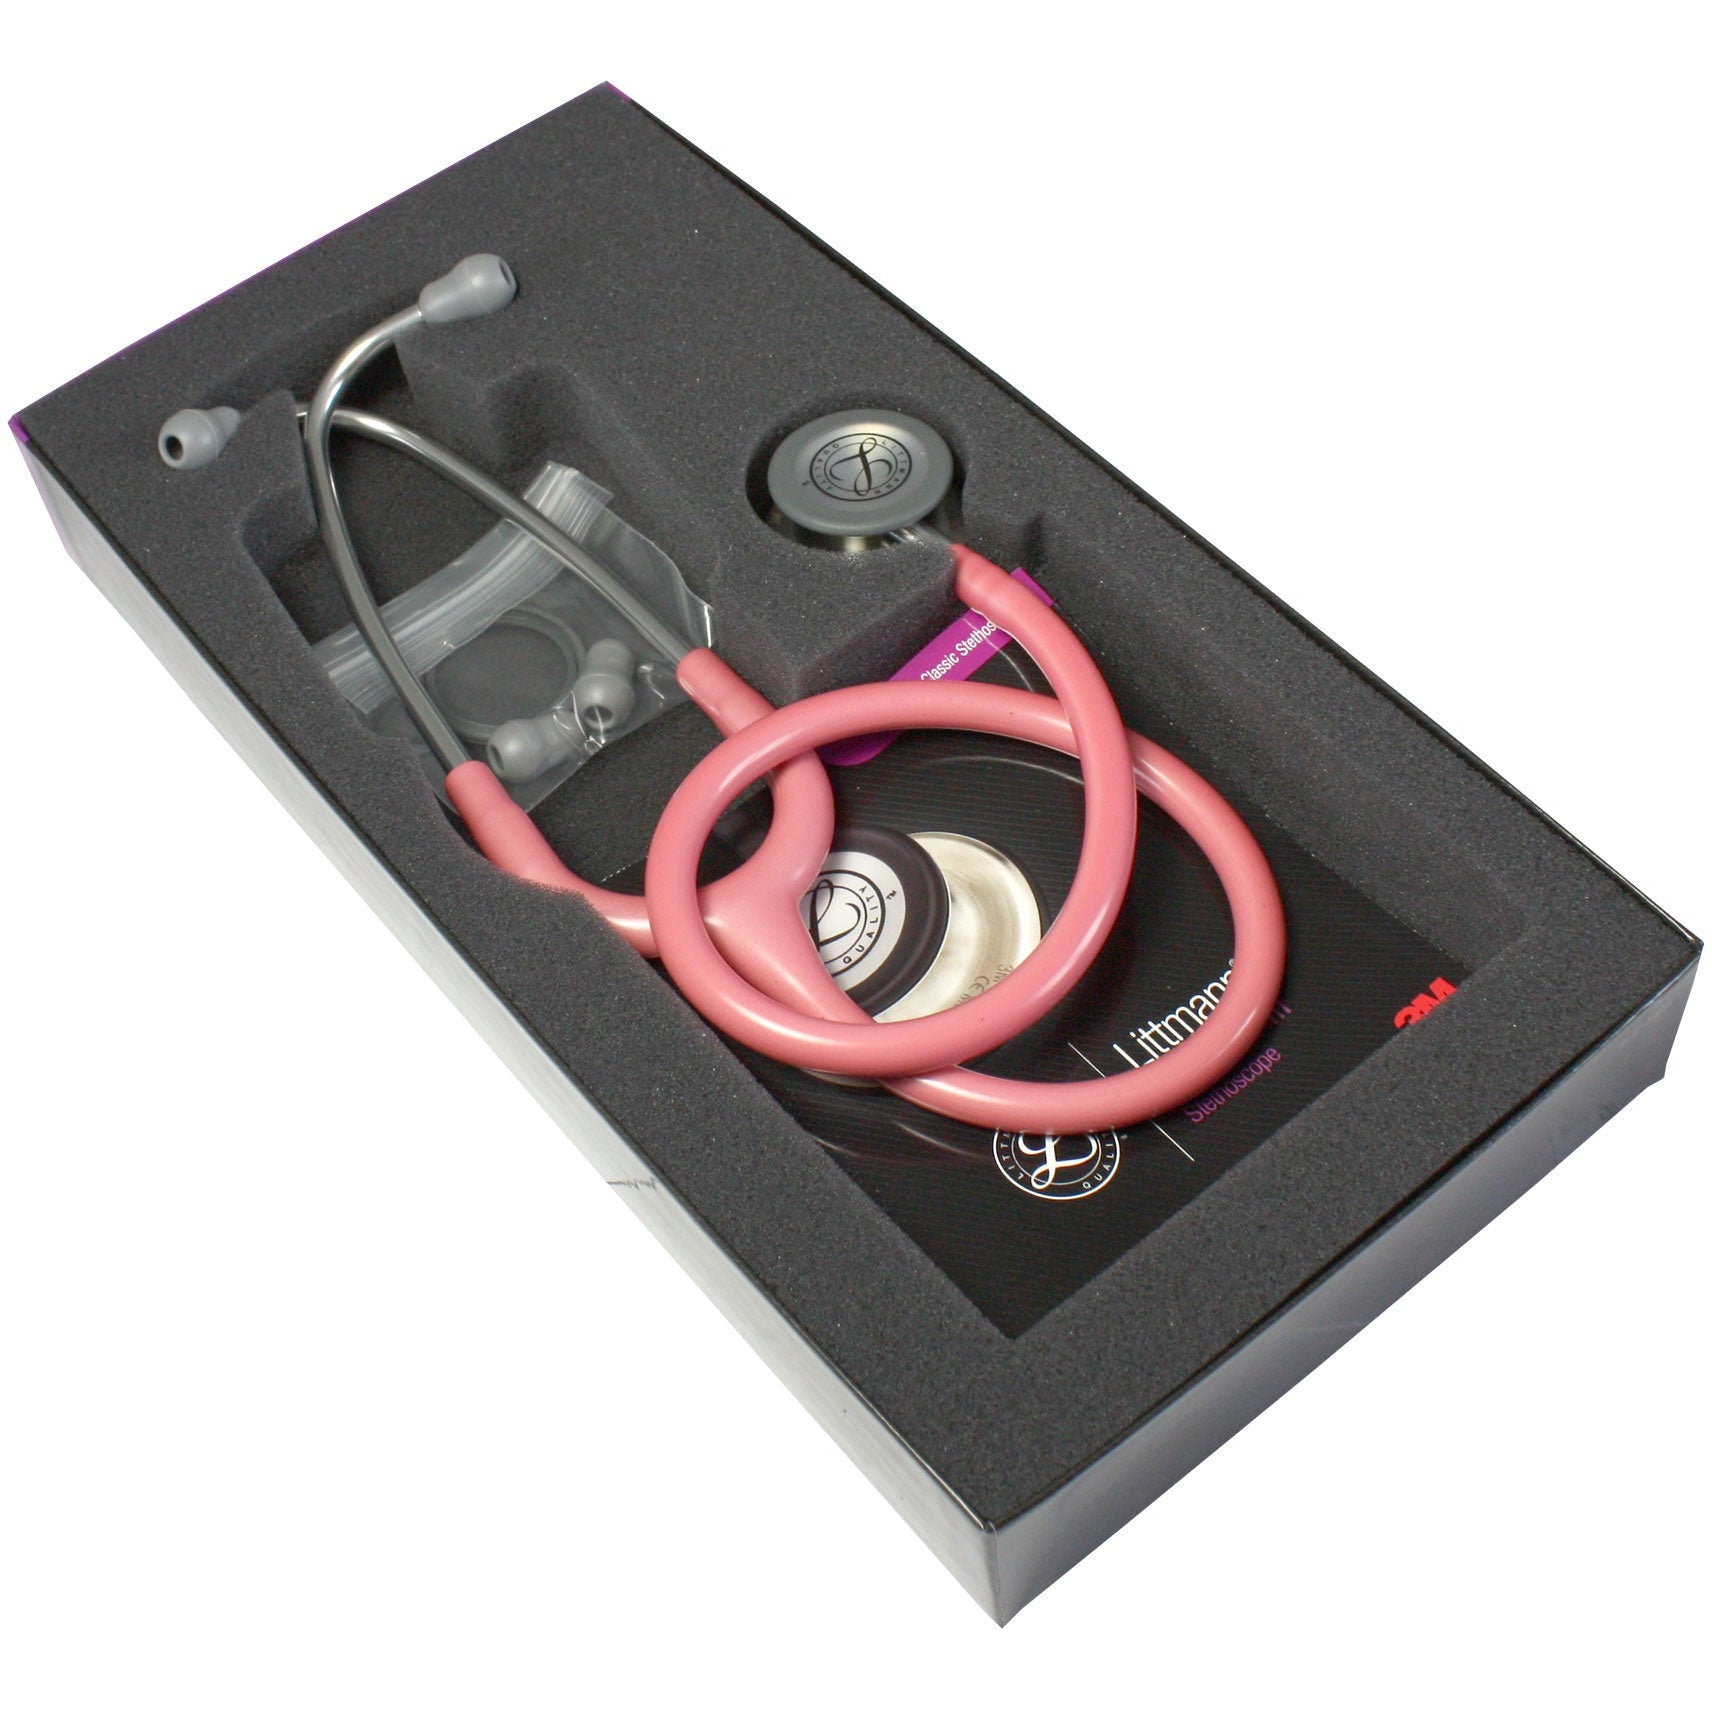 Littmann Classic III Stethoscope: Pearl Pink 5633 3M Littmann